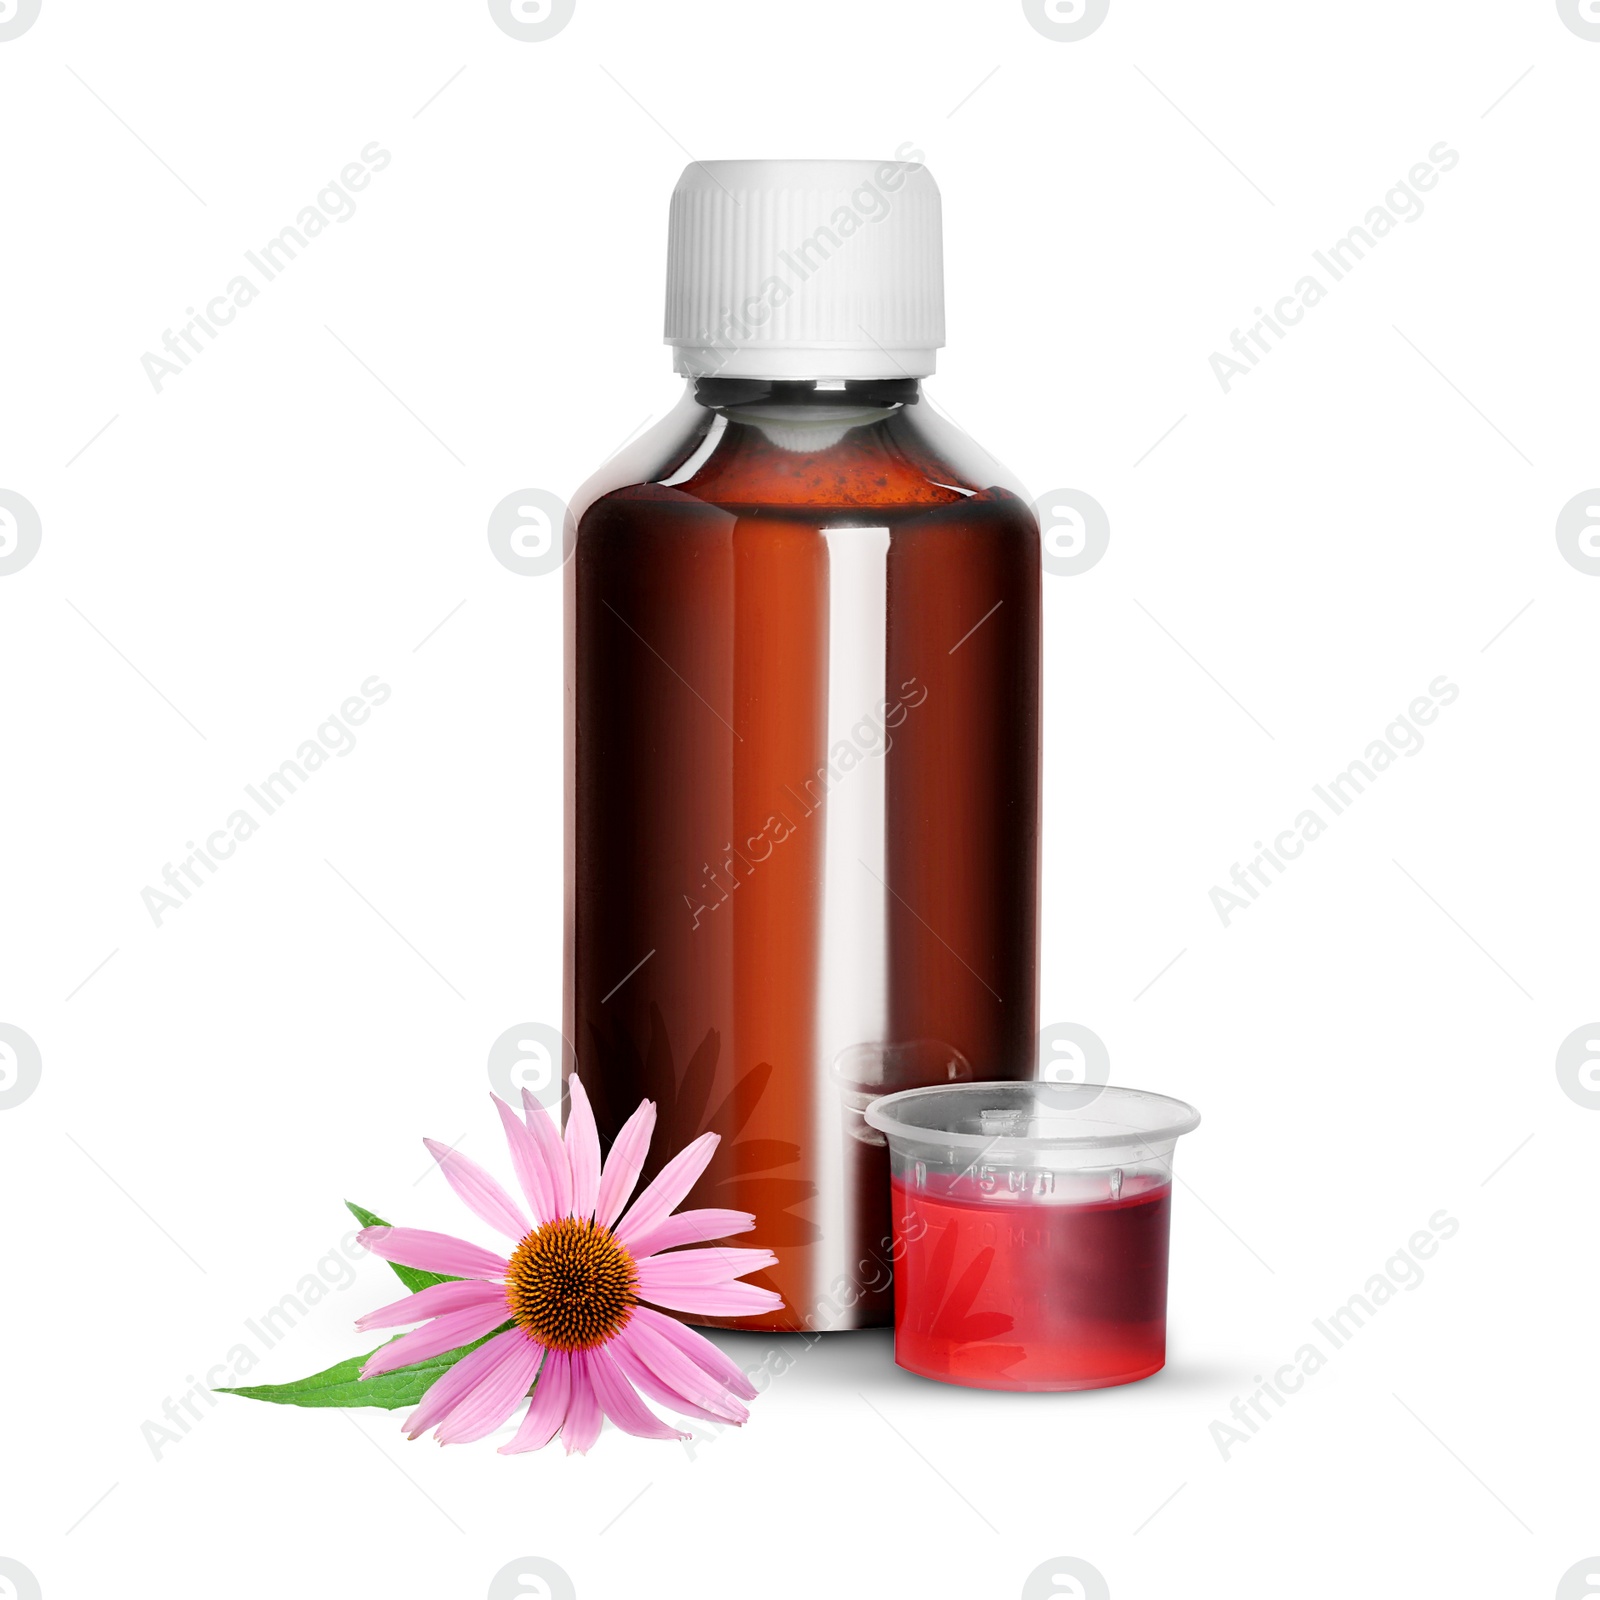 Image of Bottle of echinacea syrup and flower on white background